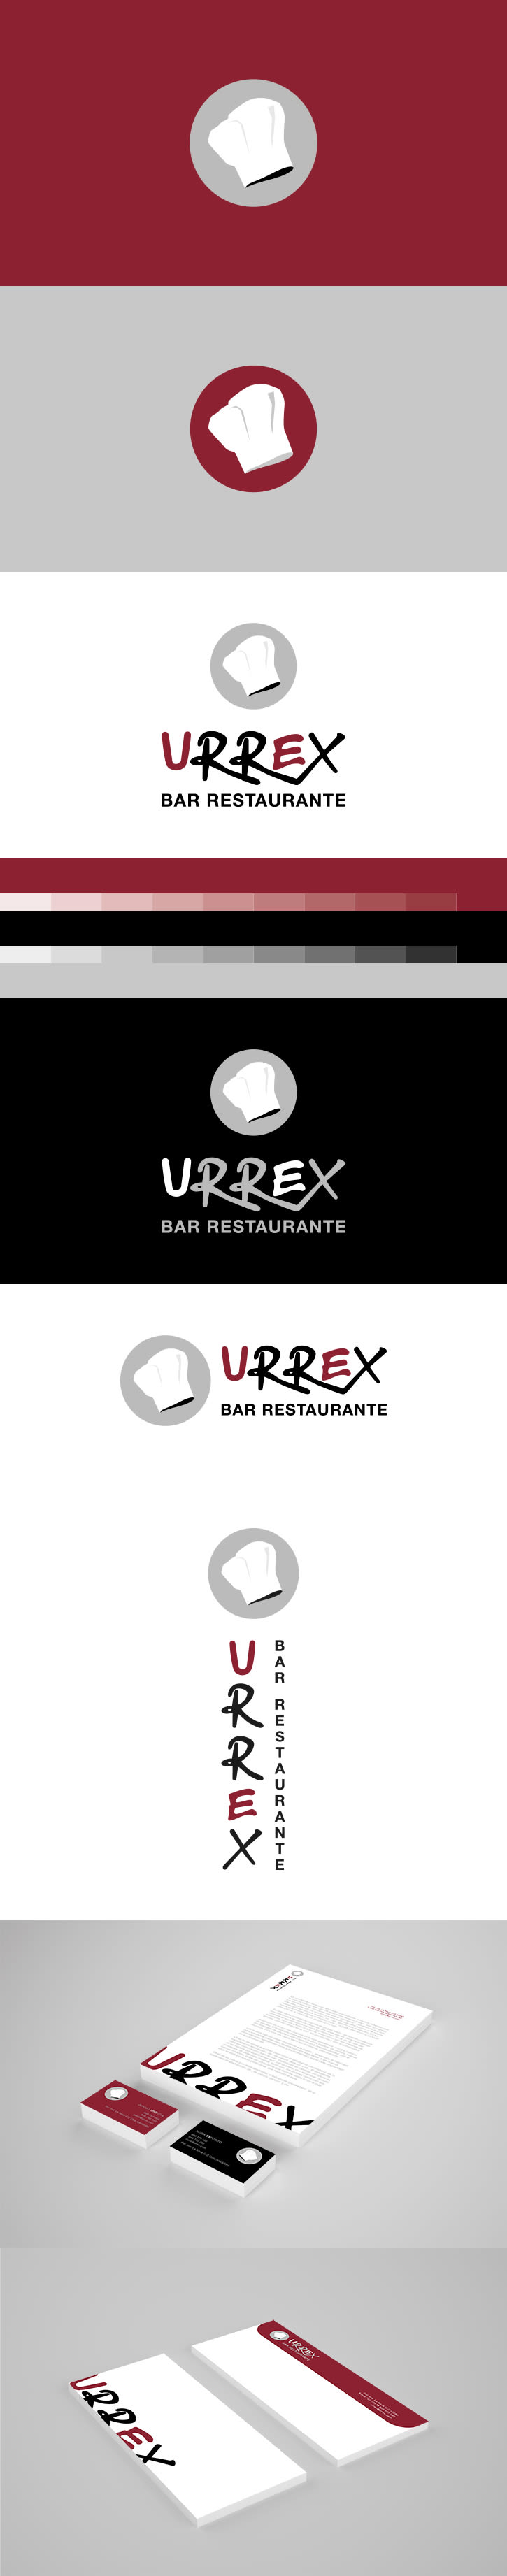 Identidad visual — URREX Bar Restaurante 1